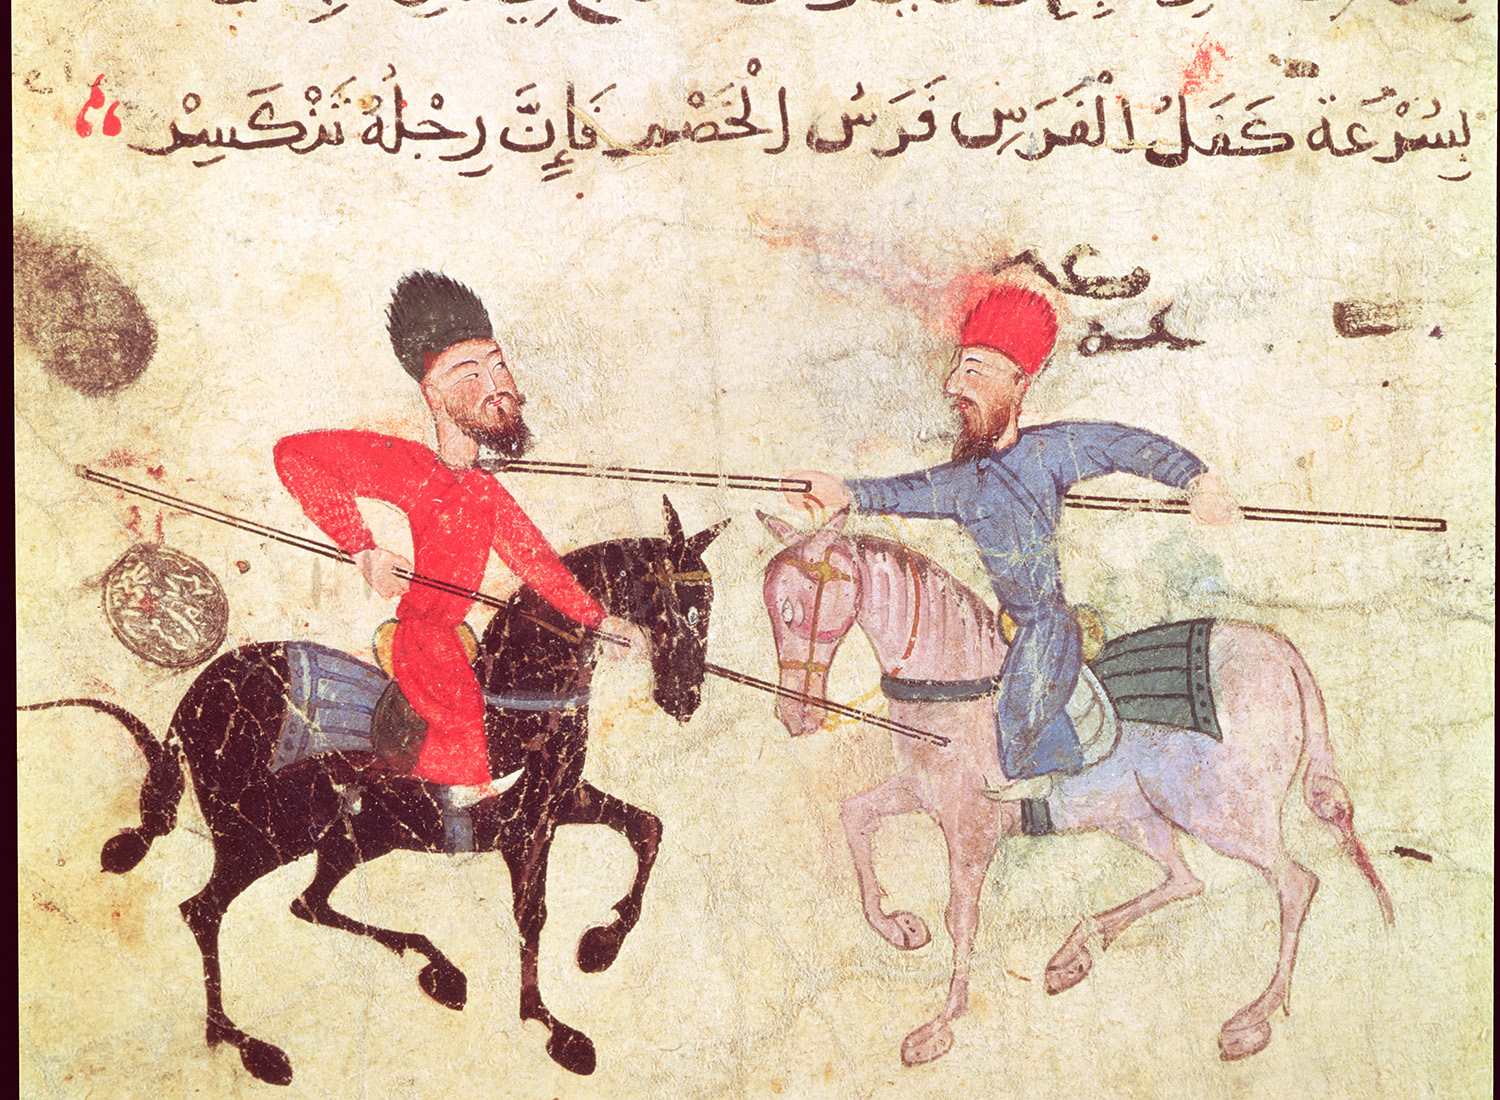 Two men duelling on horseback, Egyptian manuscript from Fustat, Old Cairo, 12th century. (Bridgeman Images/Museum of Islamic Art, Cairo)